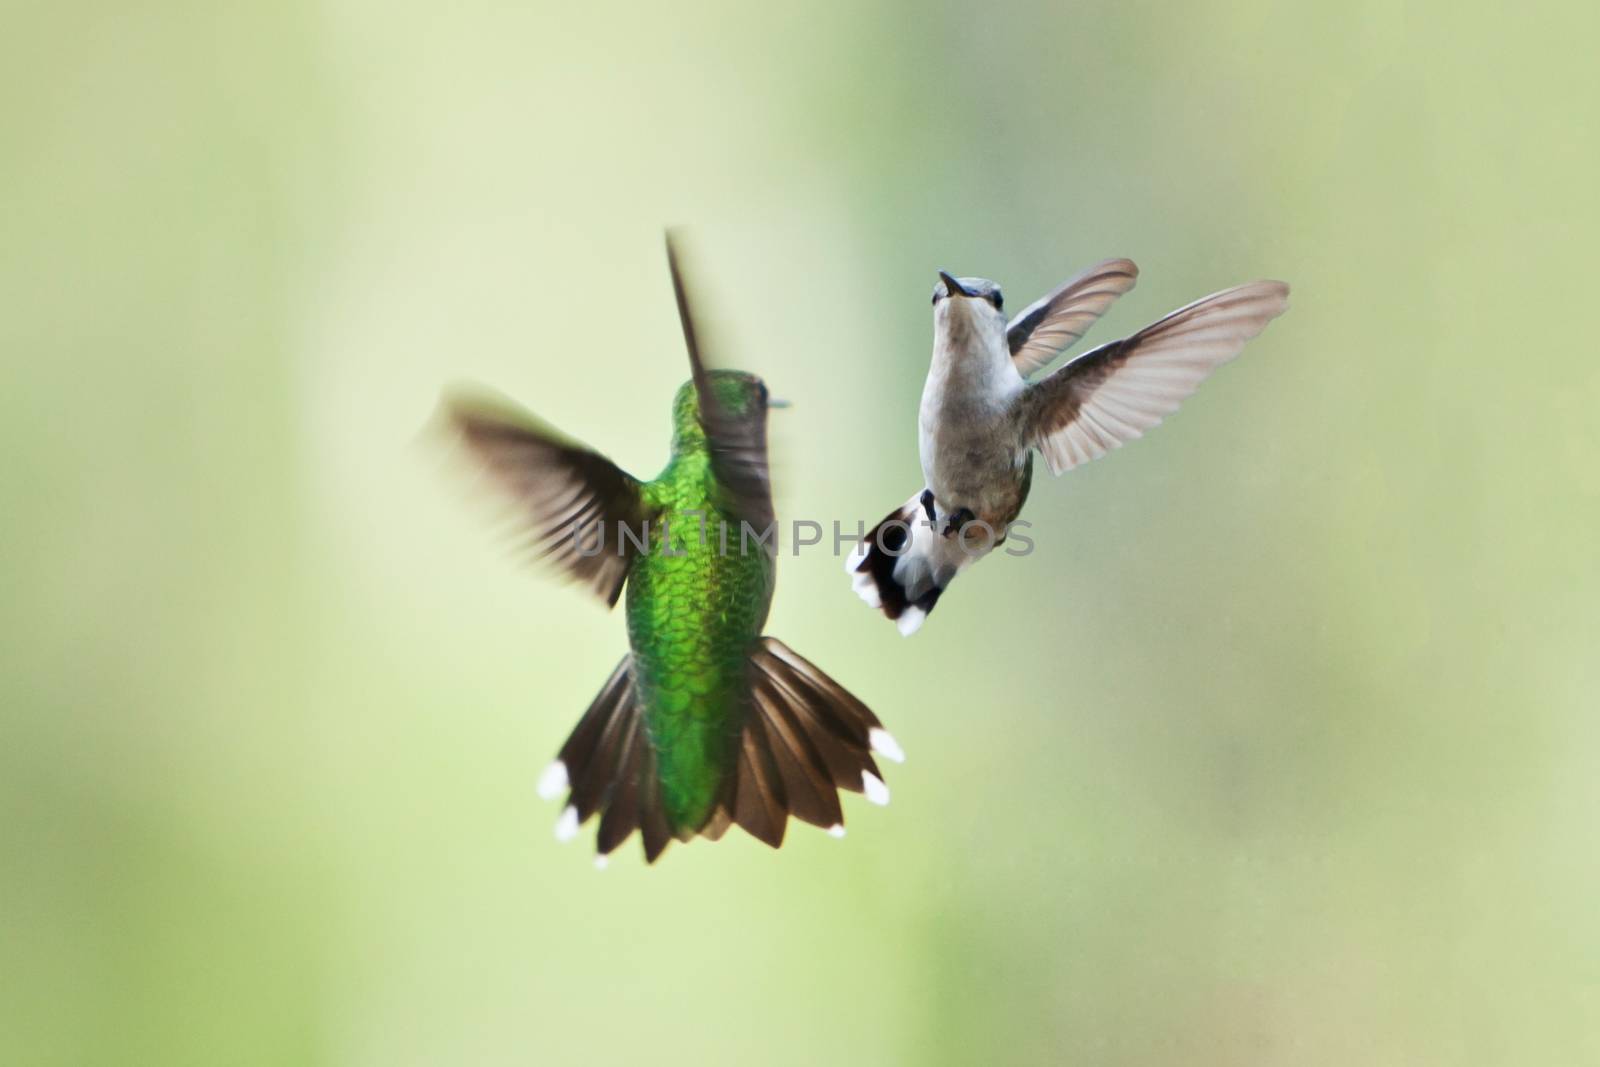 Hummingbirds mating dance by phakimata